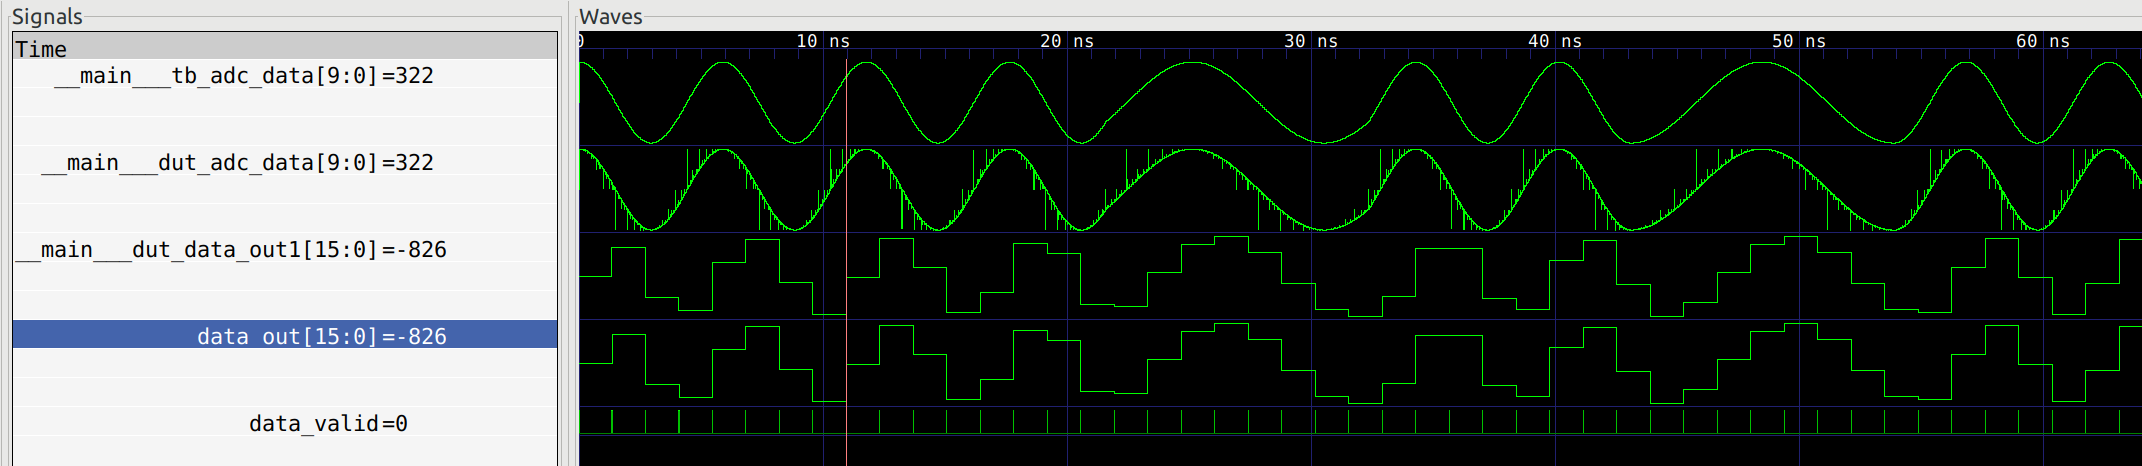 Screen capture of a simulation waveform